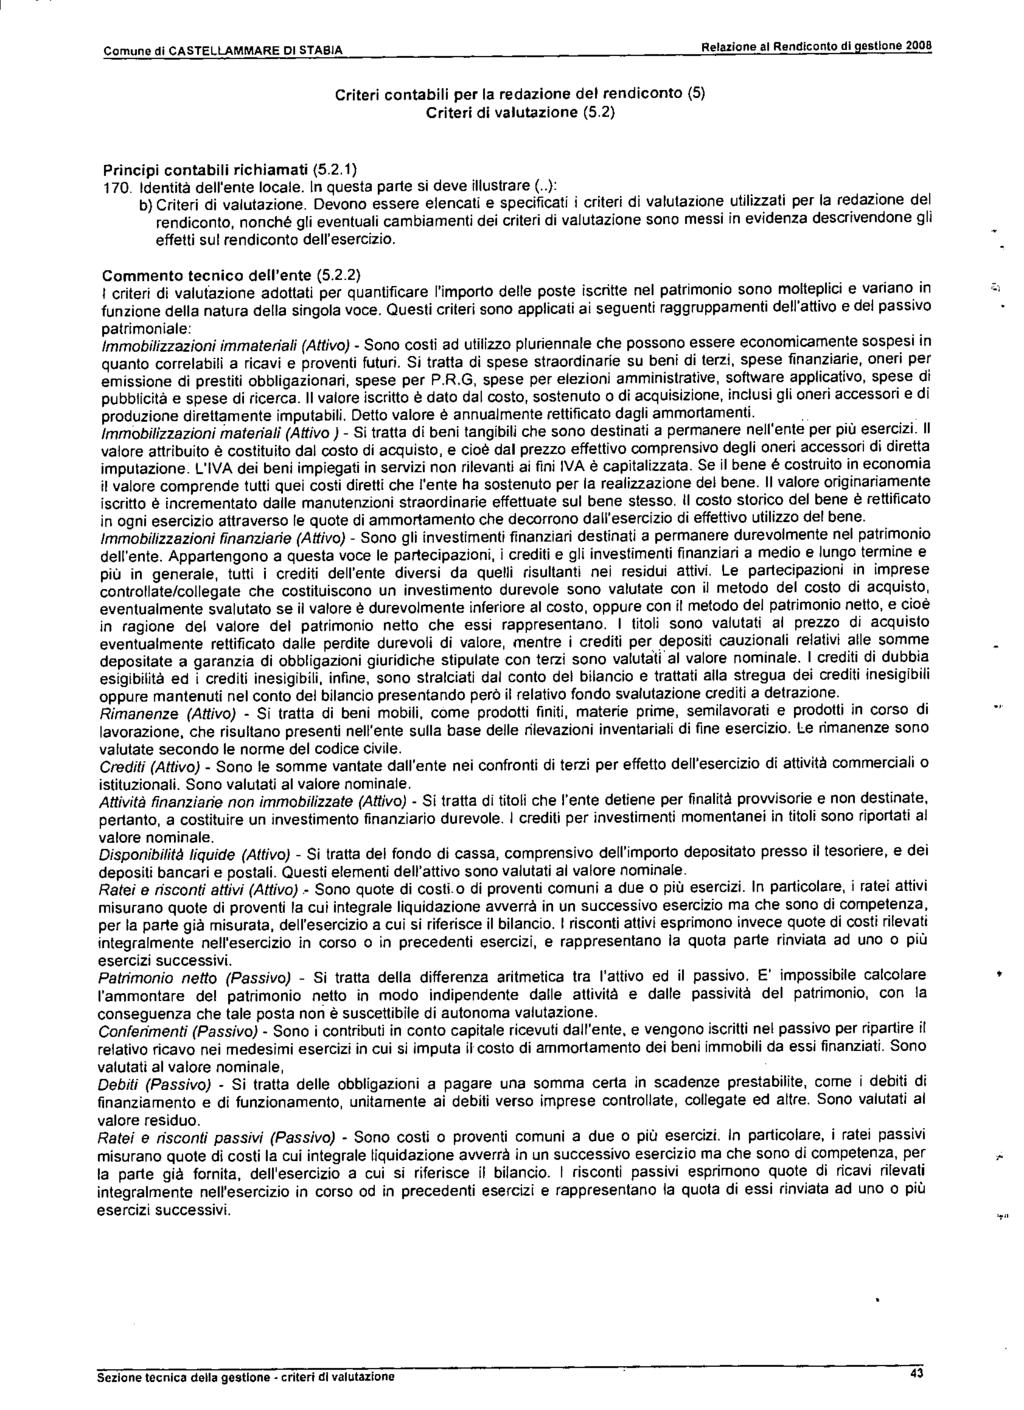 Comune di CASELLAMMARE DI SABIA Reazione a Rendiconto di gestione 2008 Criteri contabii per a redazione de rendiconto (5) Criteri di vautazione (5.2) Principi contabii richiamati (5.2.1) 170.